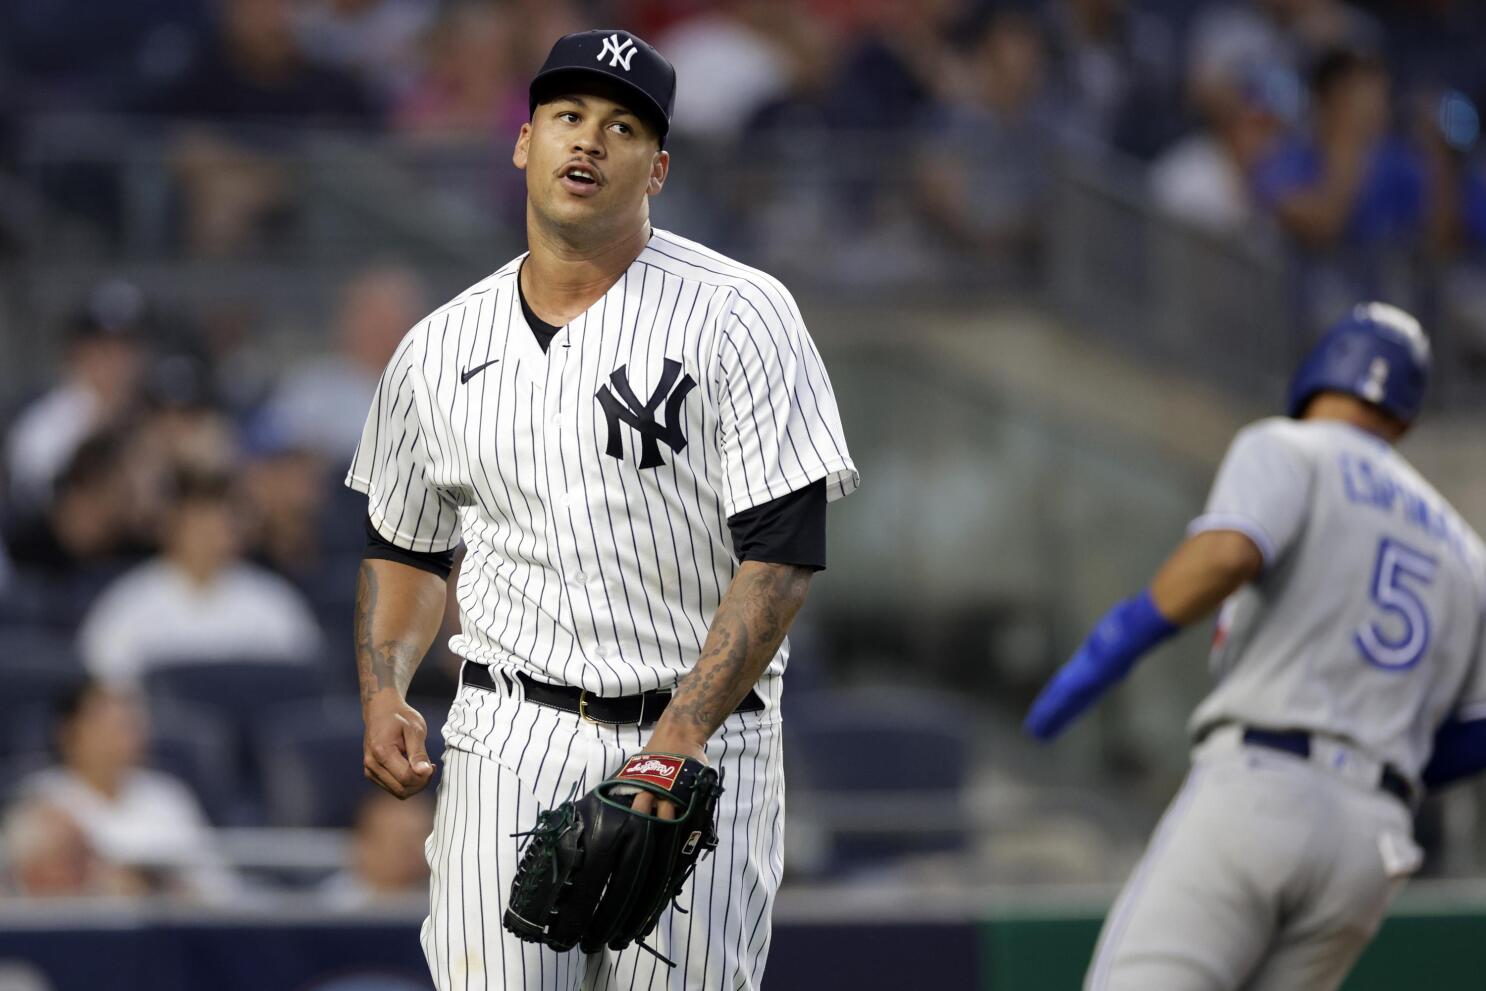 Frankie Montas starting to look like Yankees' problem